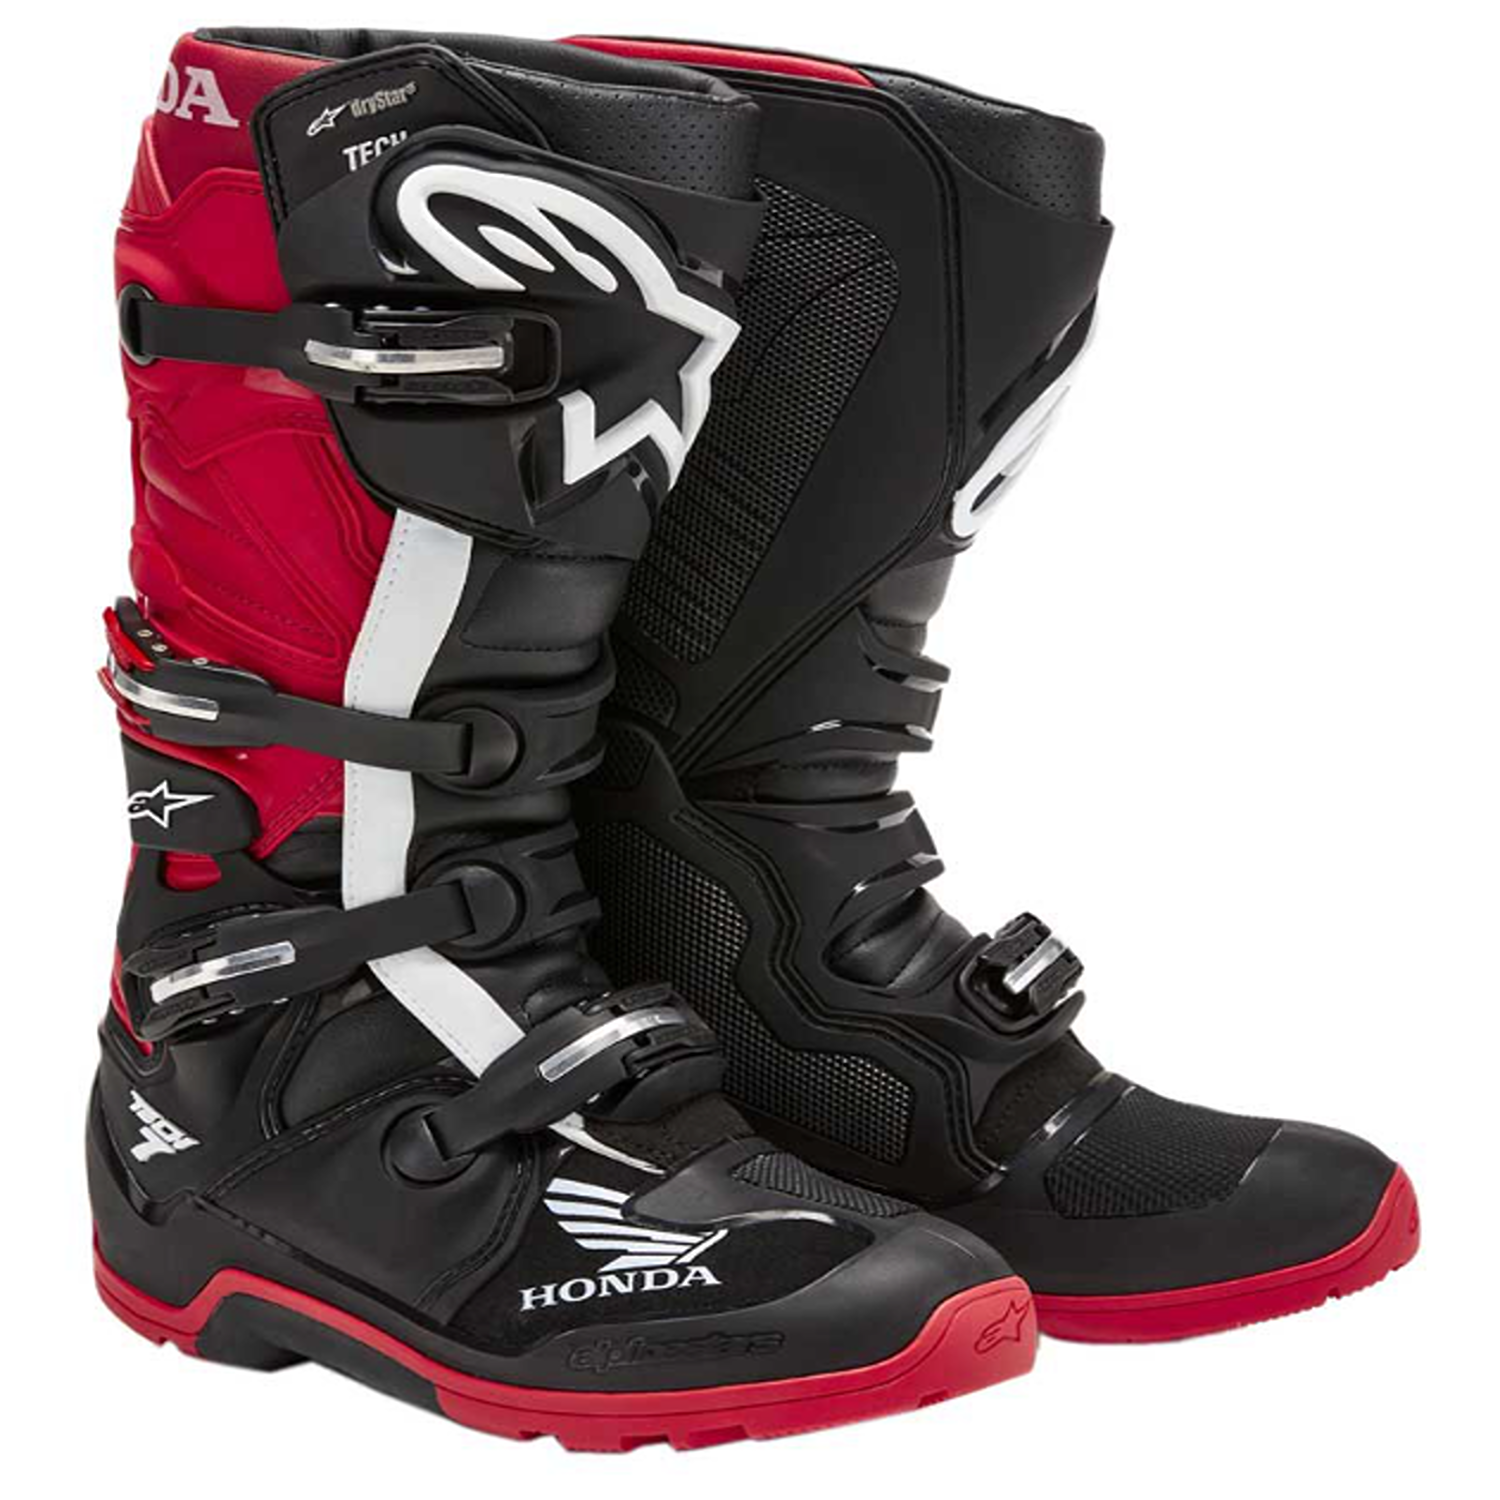 Image of Alpinestars Honda Tech 7 Enduro Drystar Boots Black Bright Red Taille US 13